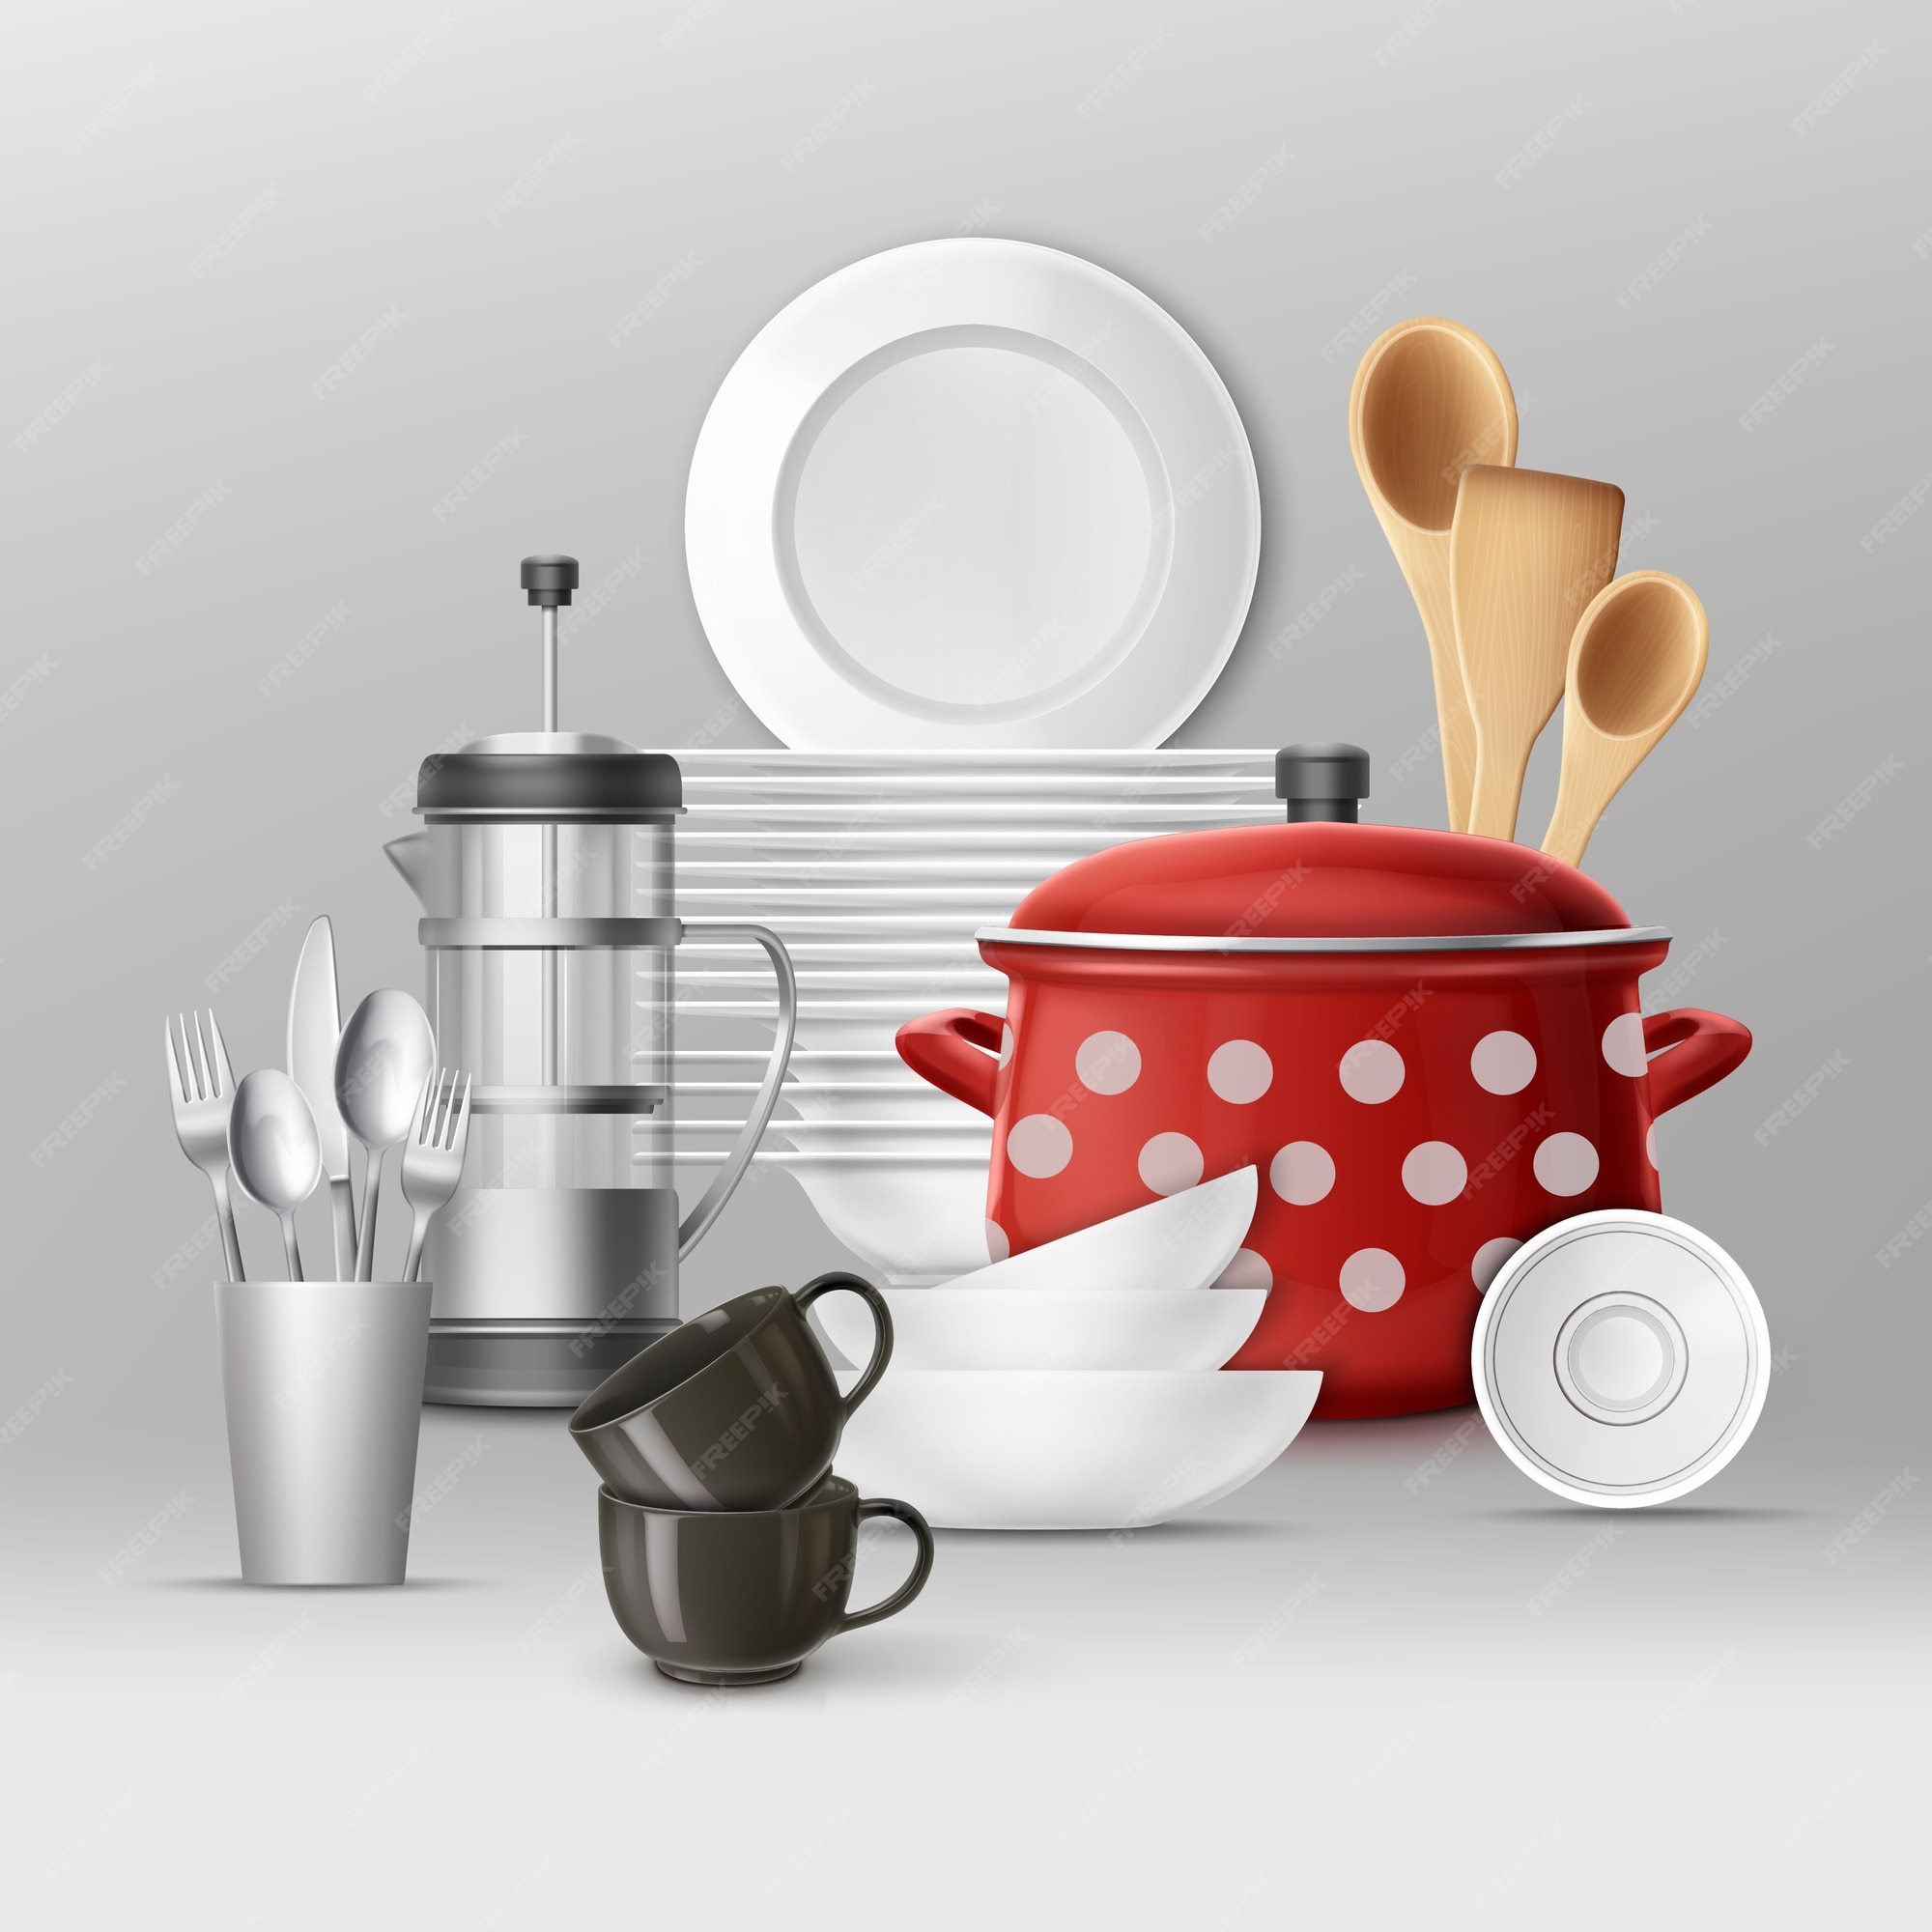 https://img.freepik.com/premium-vector/set-kitchenware-dishes-cooking-utensils_1284-46359.jpg?w=2000